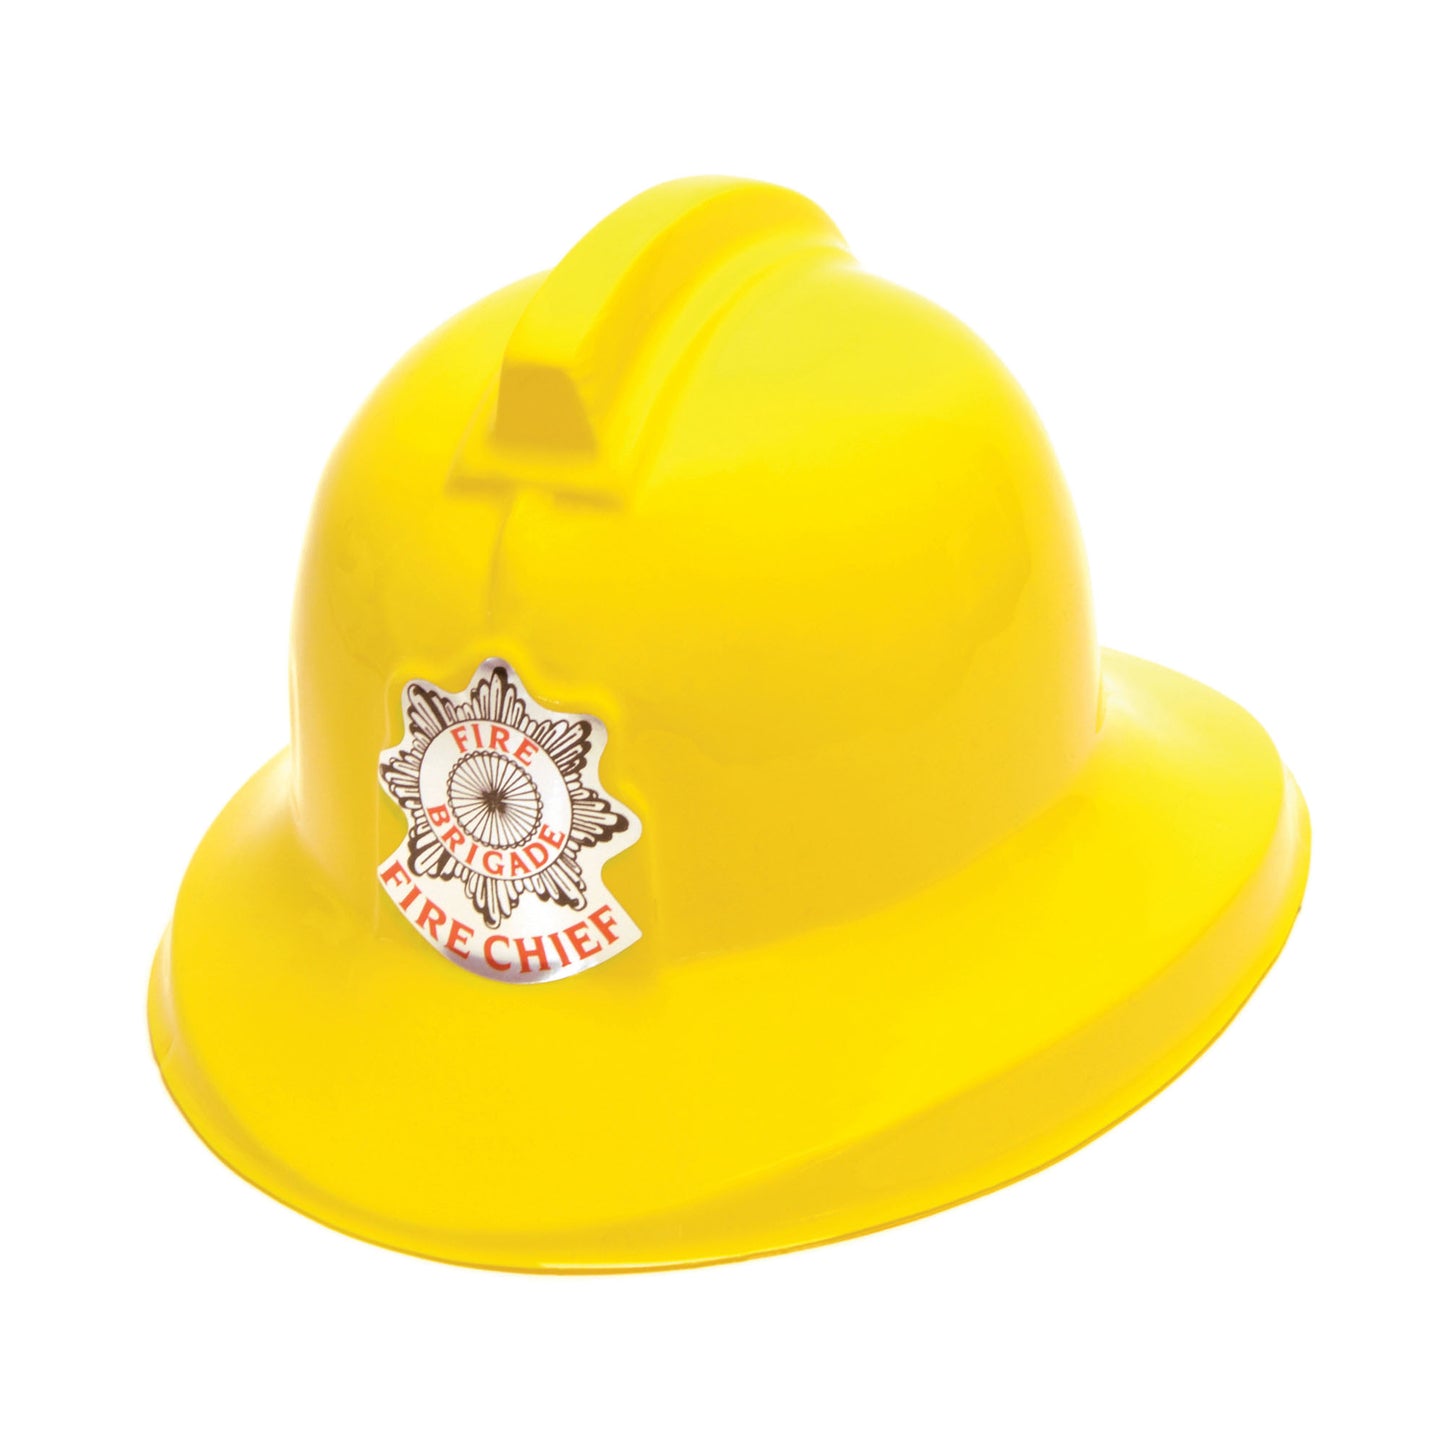 Fireman Helmet - Plastic